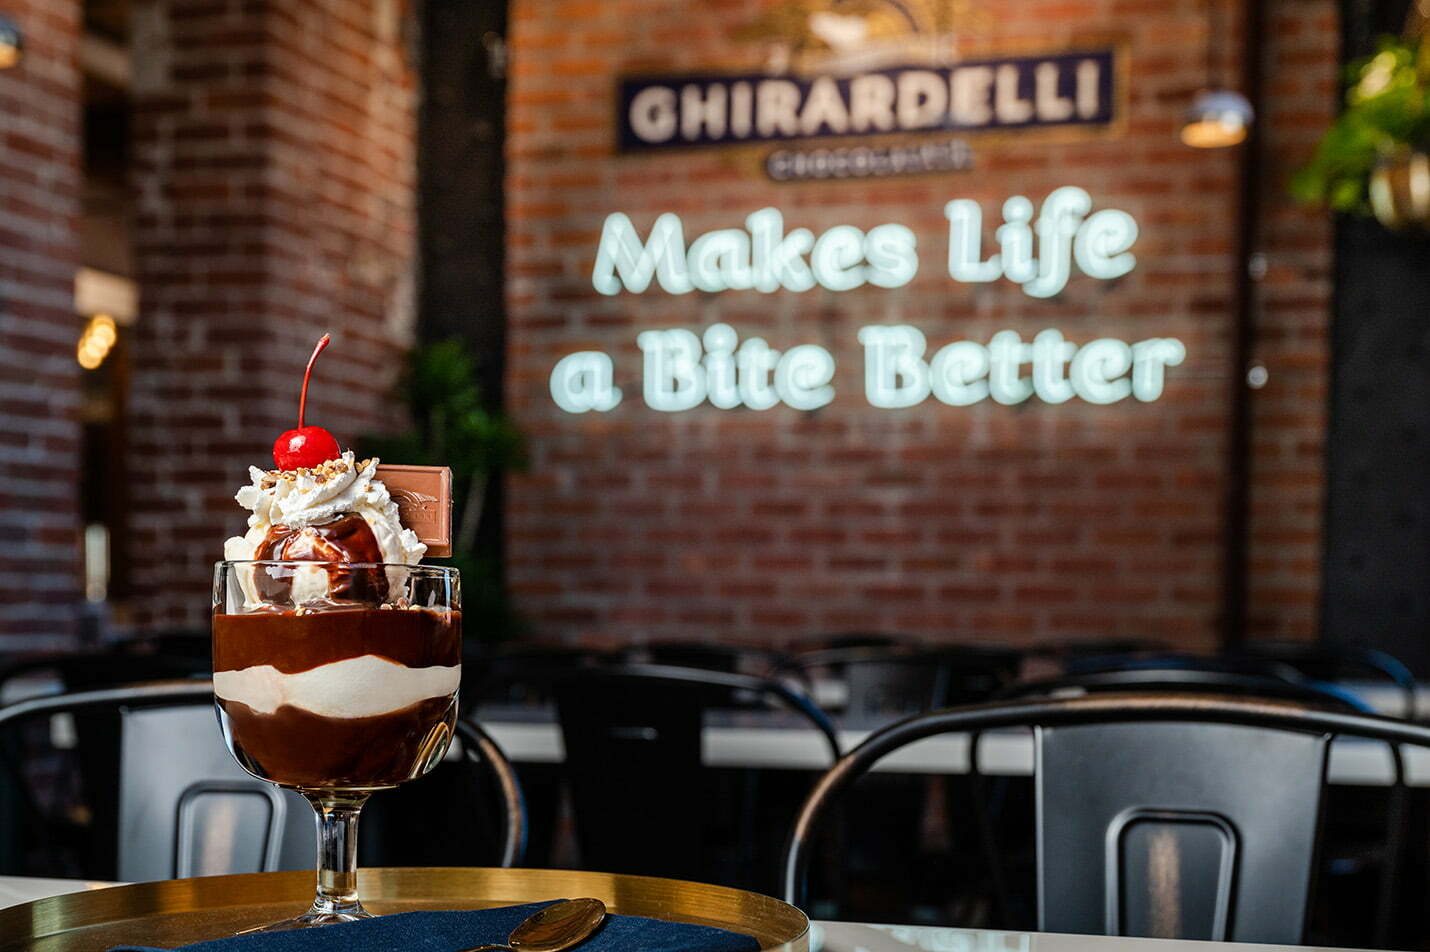 Ice Cream Sundae - Ghirardelli’s  flagship Chocolate Experience Store in San Francisco 